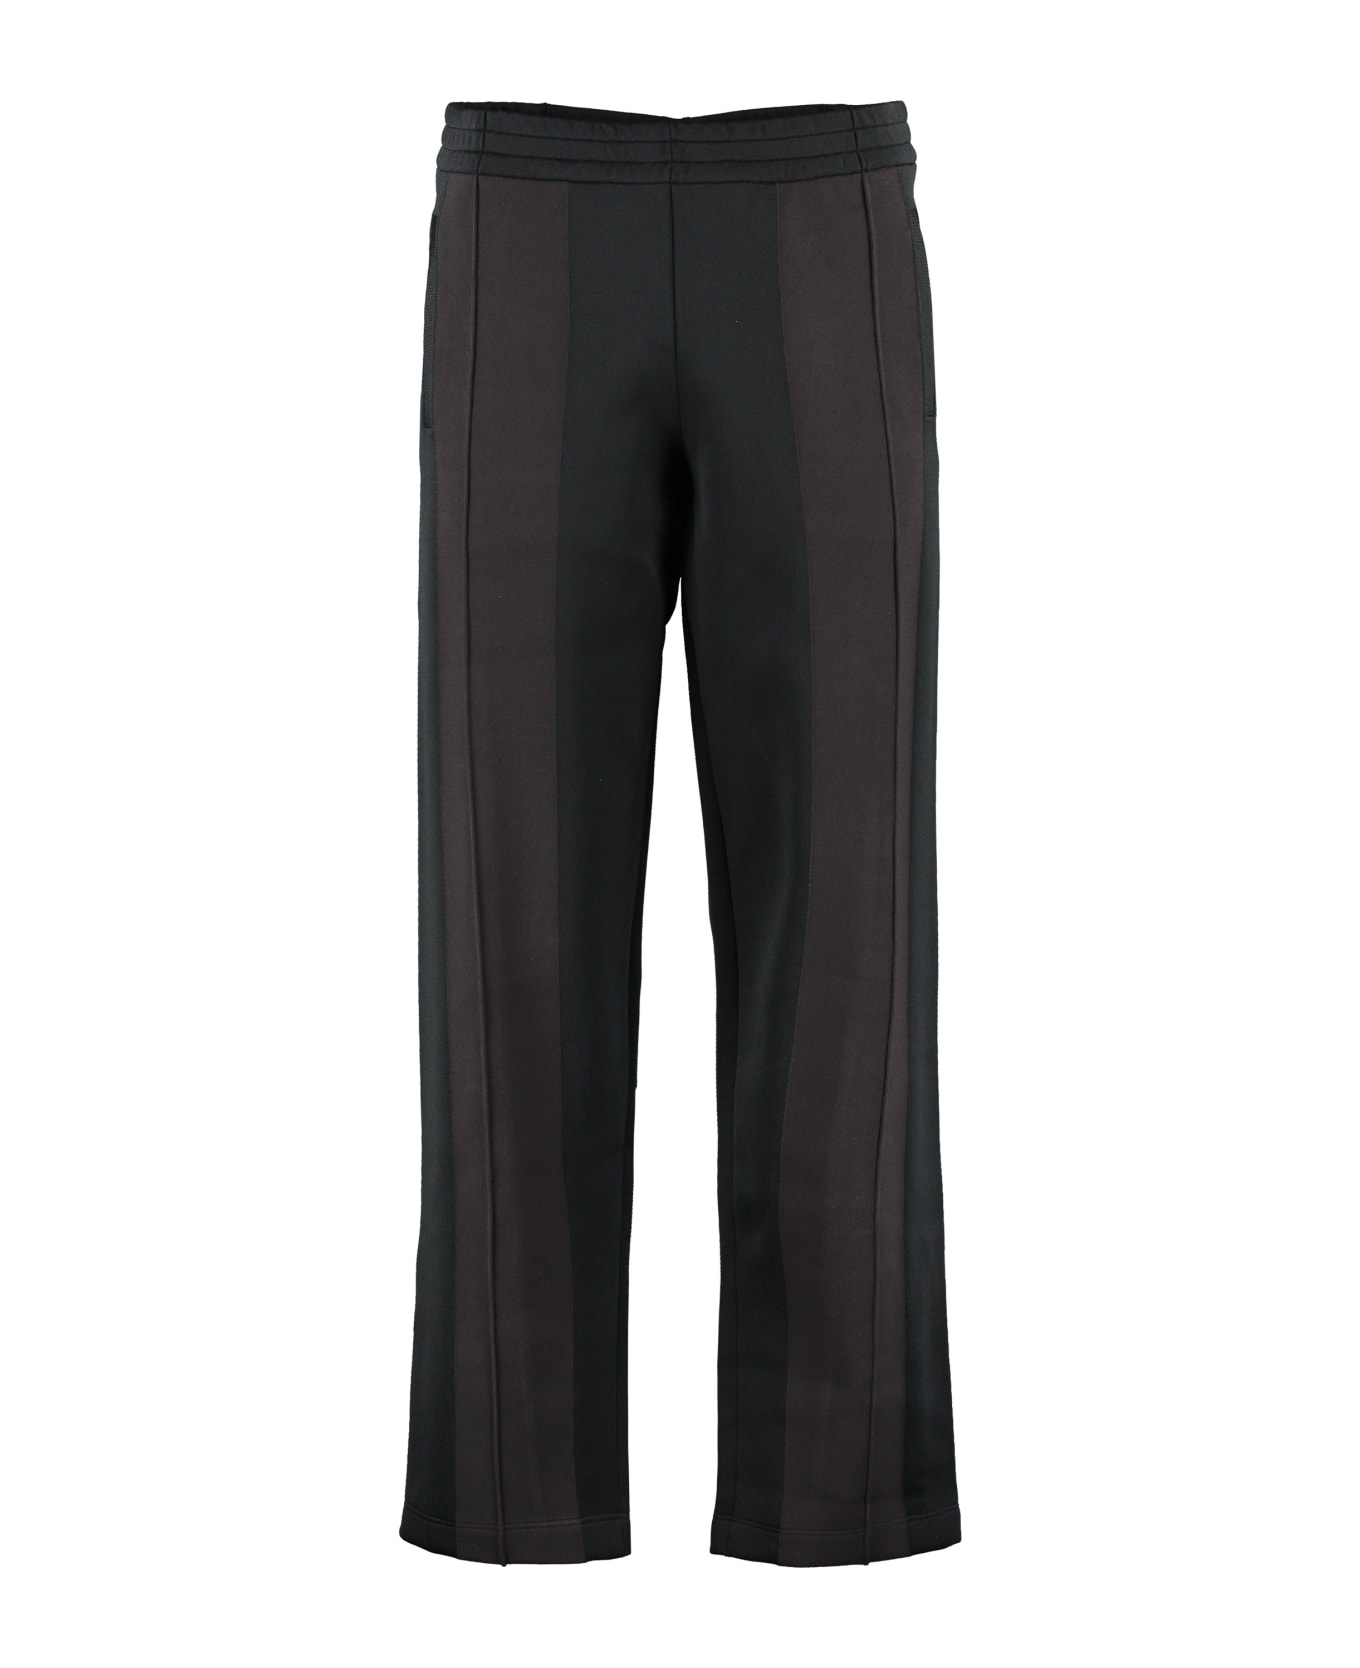 Bottega Veneta Technical Fabric Pants - black